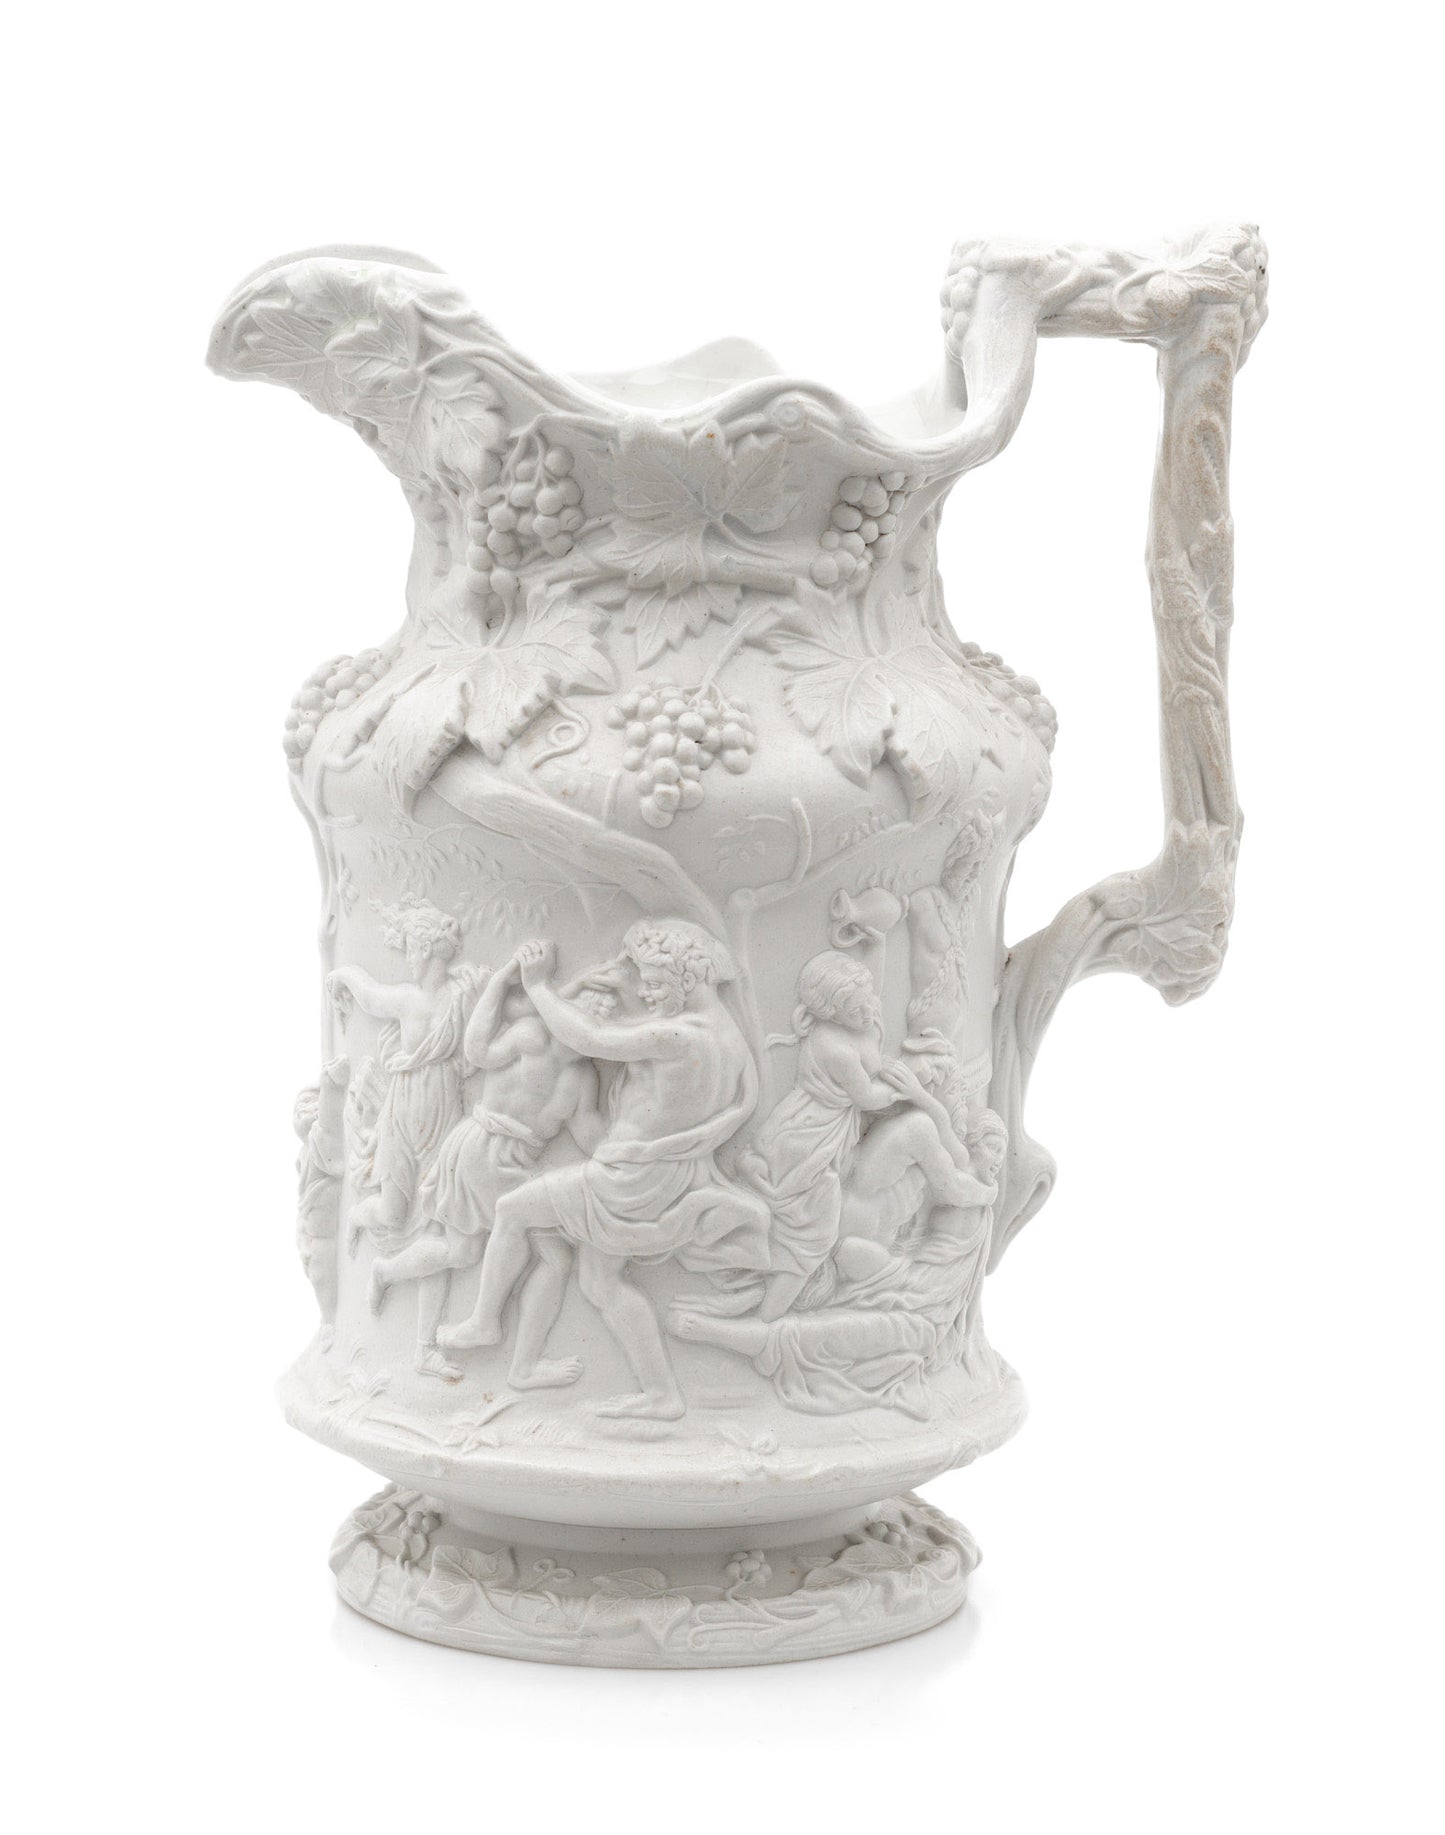 Antique Charles Meigh Bacchanalian Dance / Rubens Stoneware Moulded Jug c1844 (Code 2449)